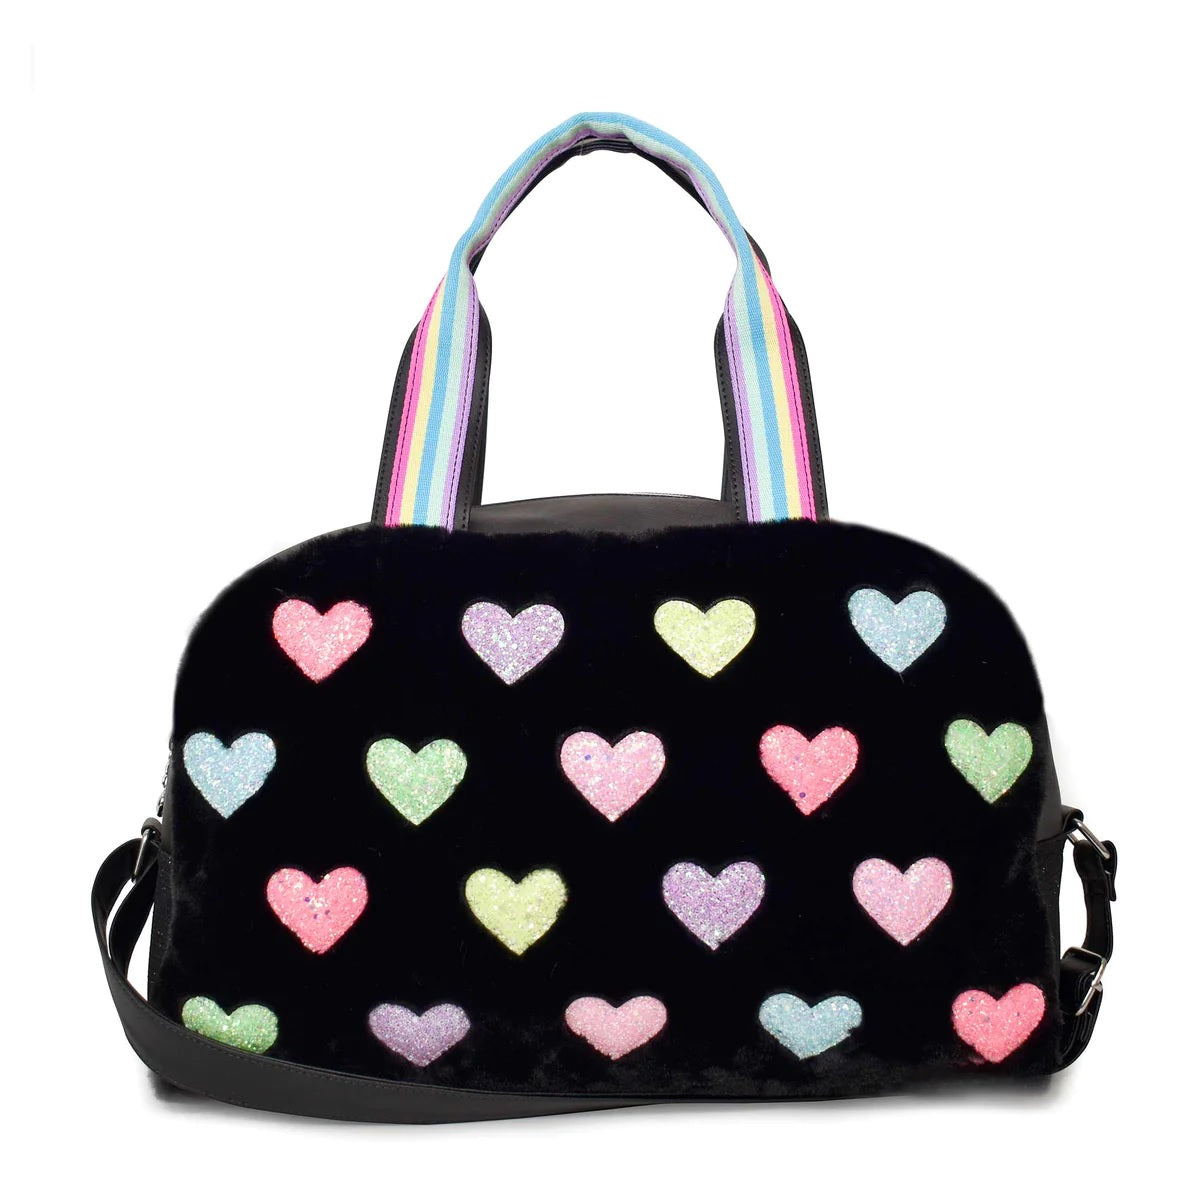 Glam Medium Plush Duffle Bag - Black Hearts